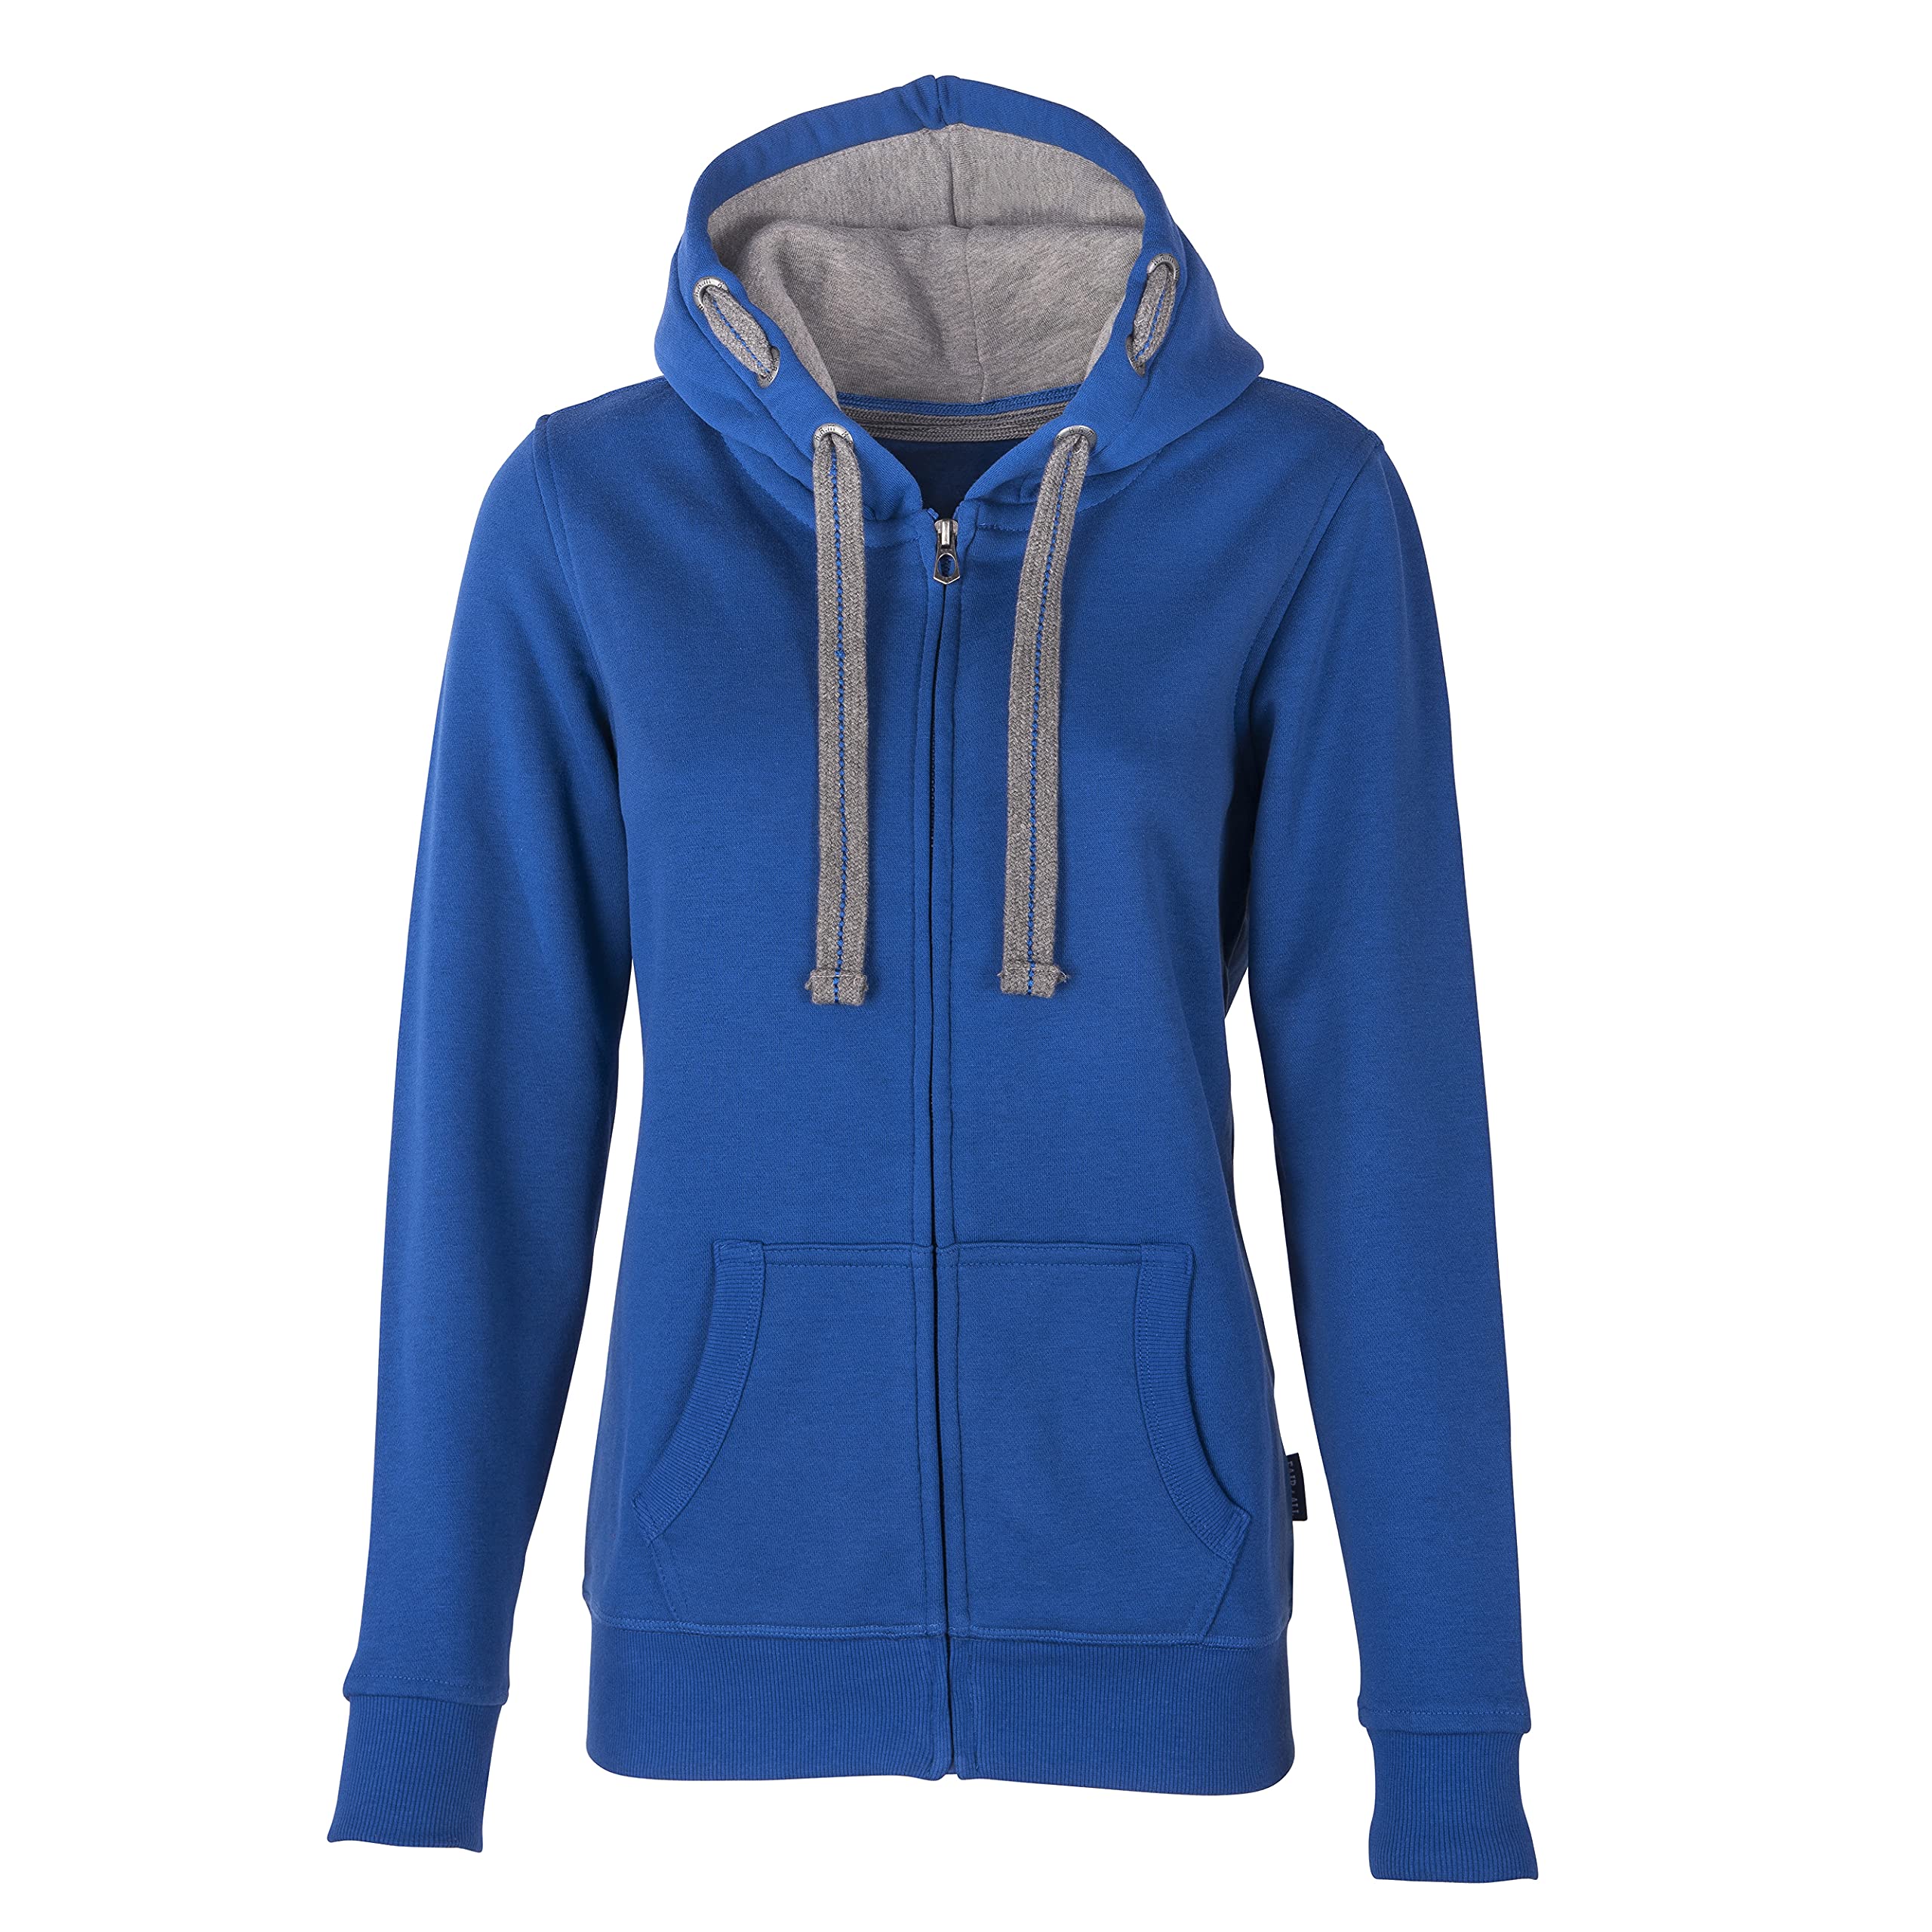 HRM Damen Jacket F hoodie, Royalblau, 5XL EU